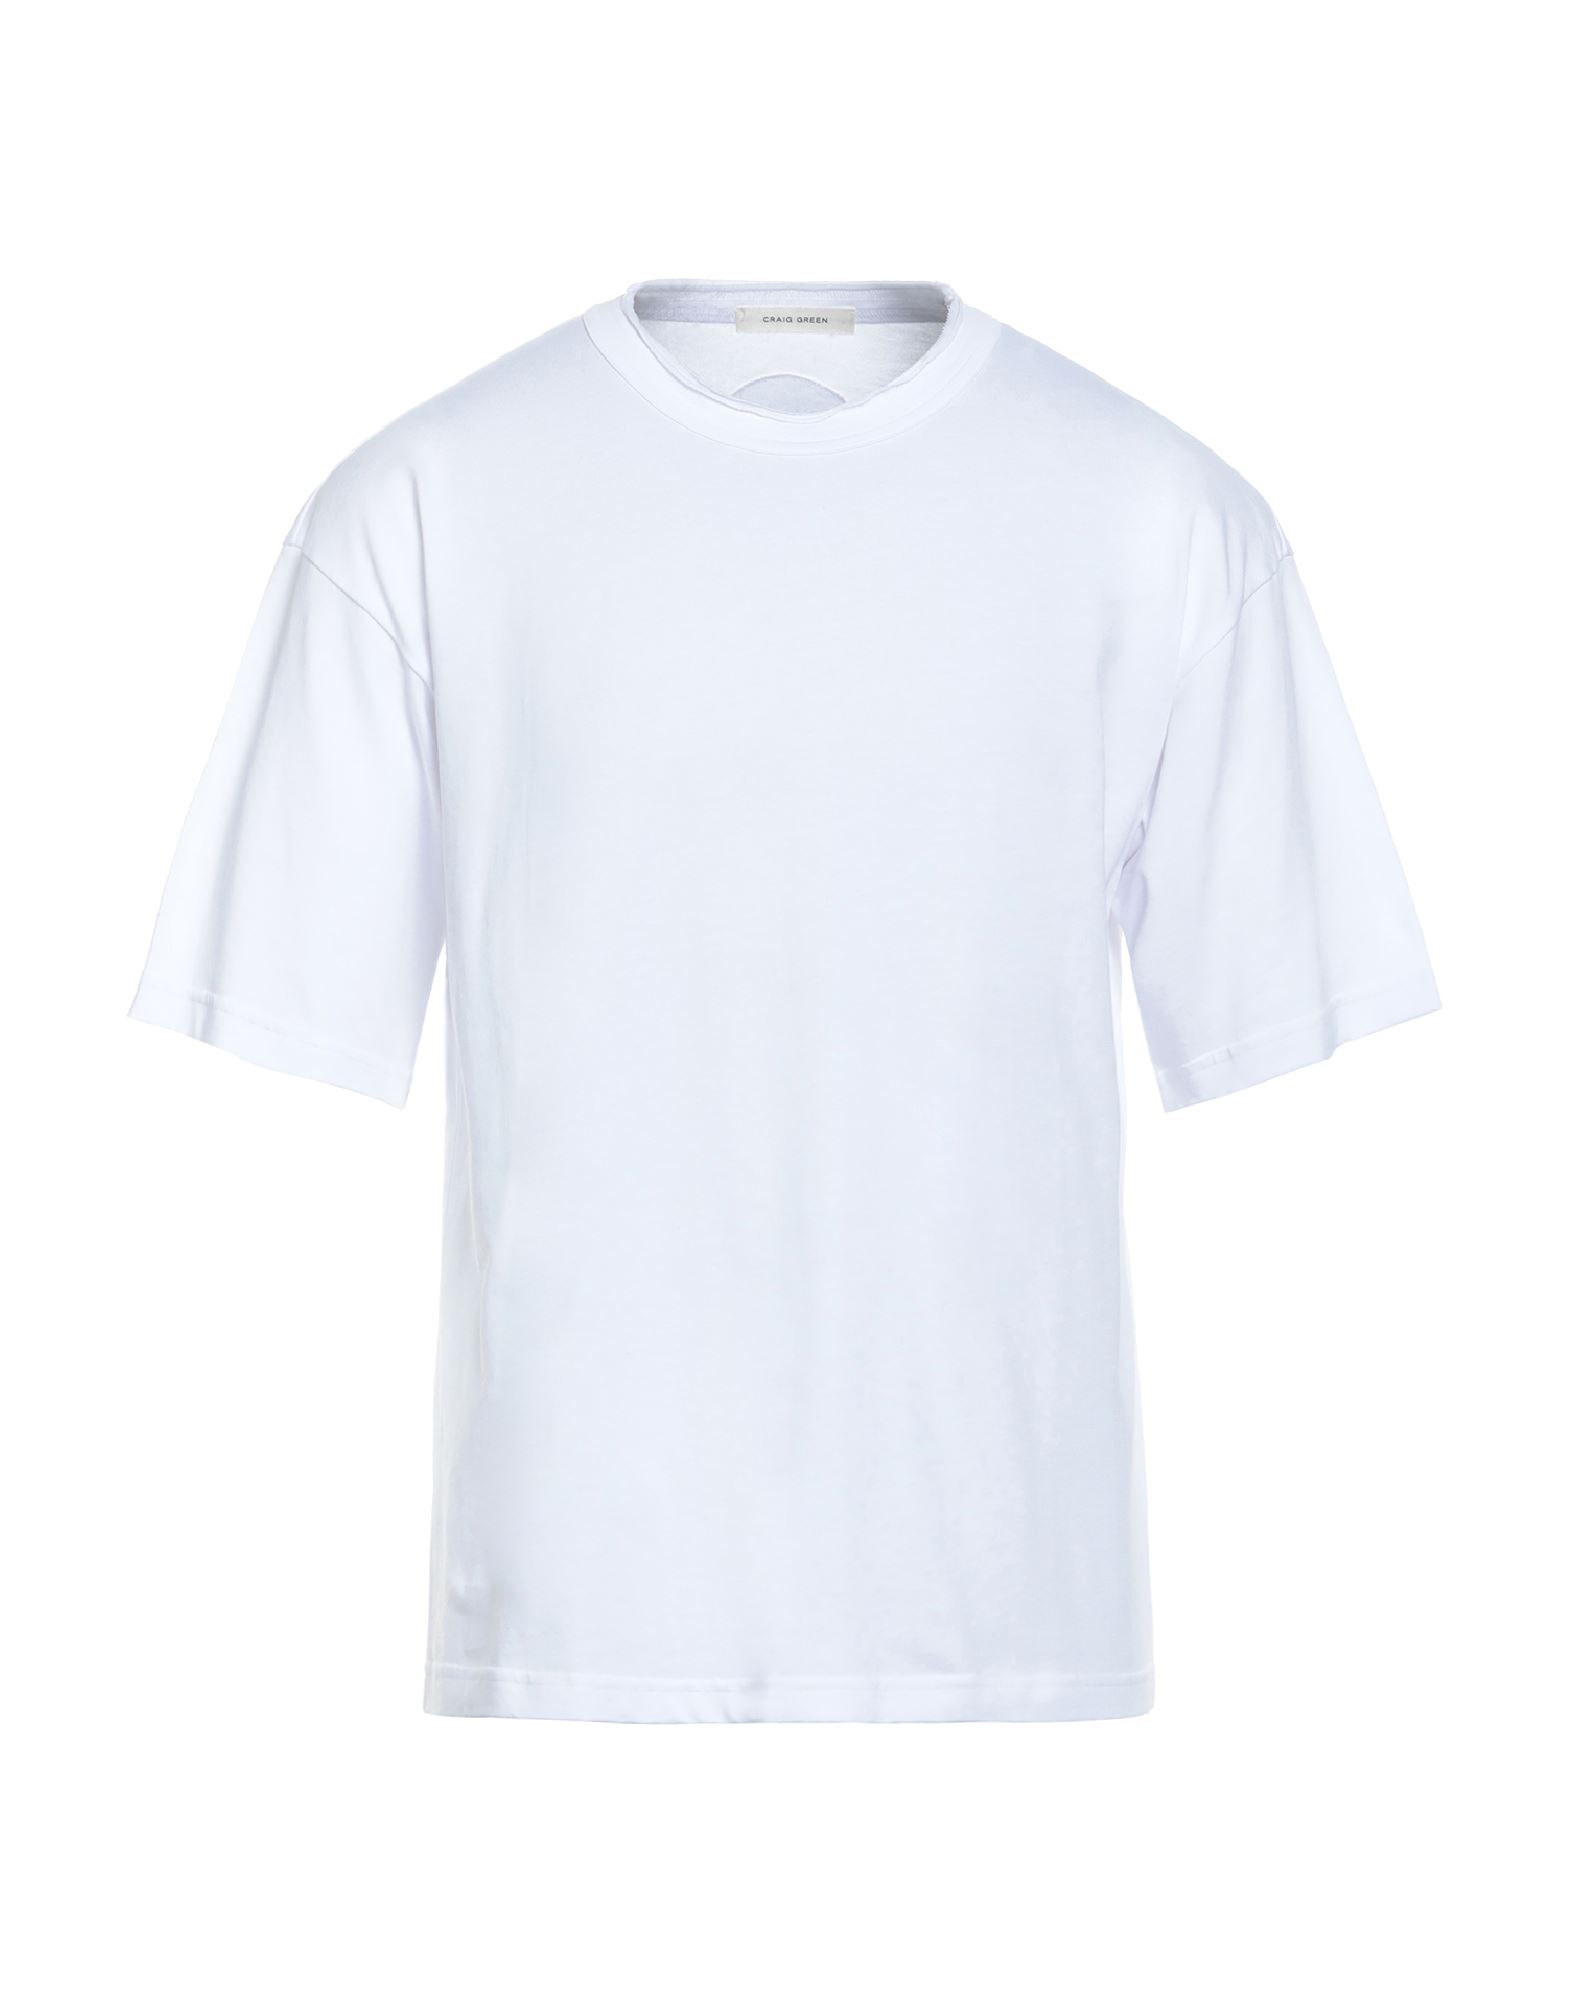 Craig Green T-shirts In White